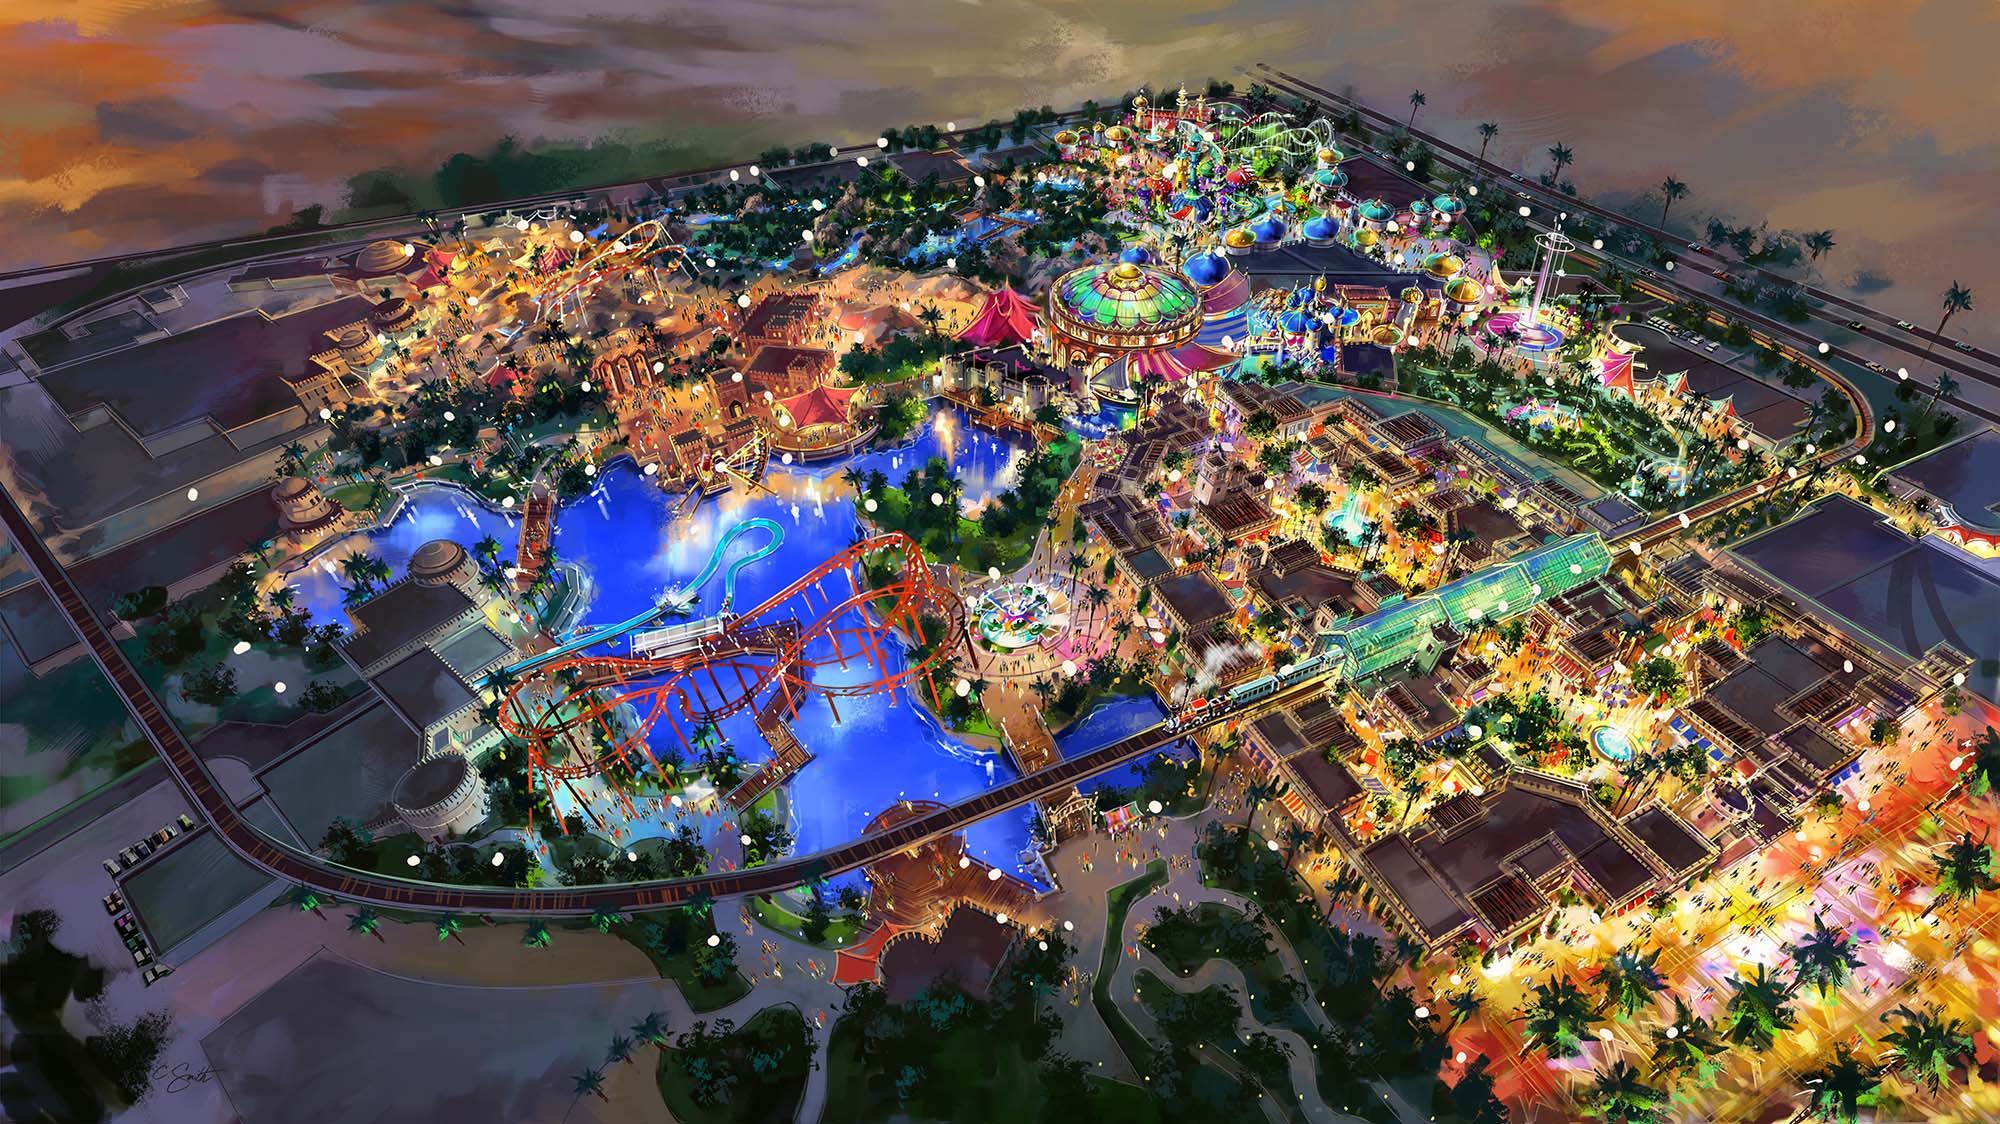 Dubai IMG Worlds of Adventure